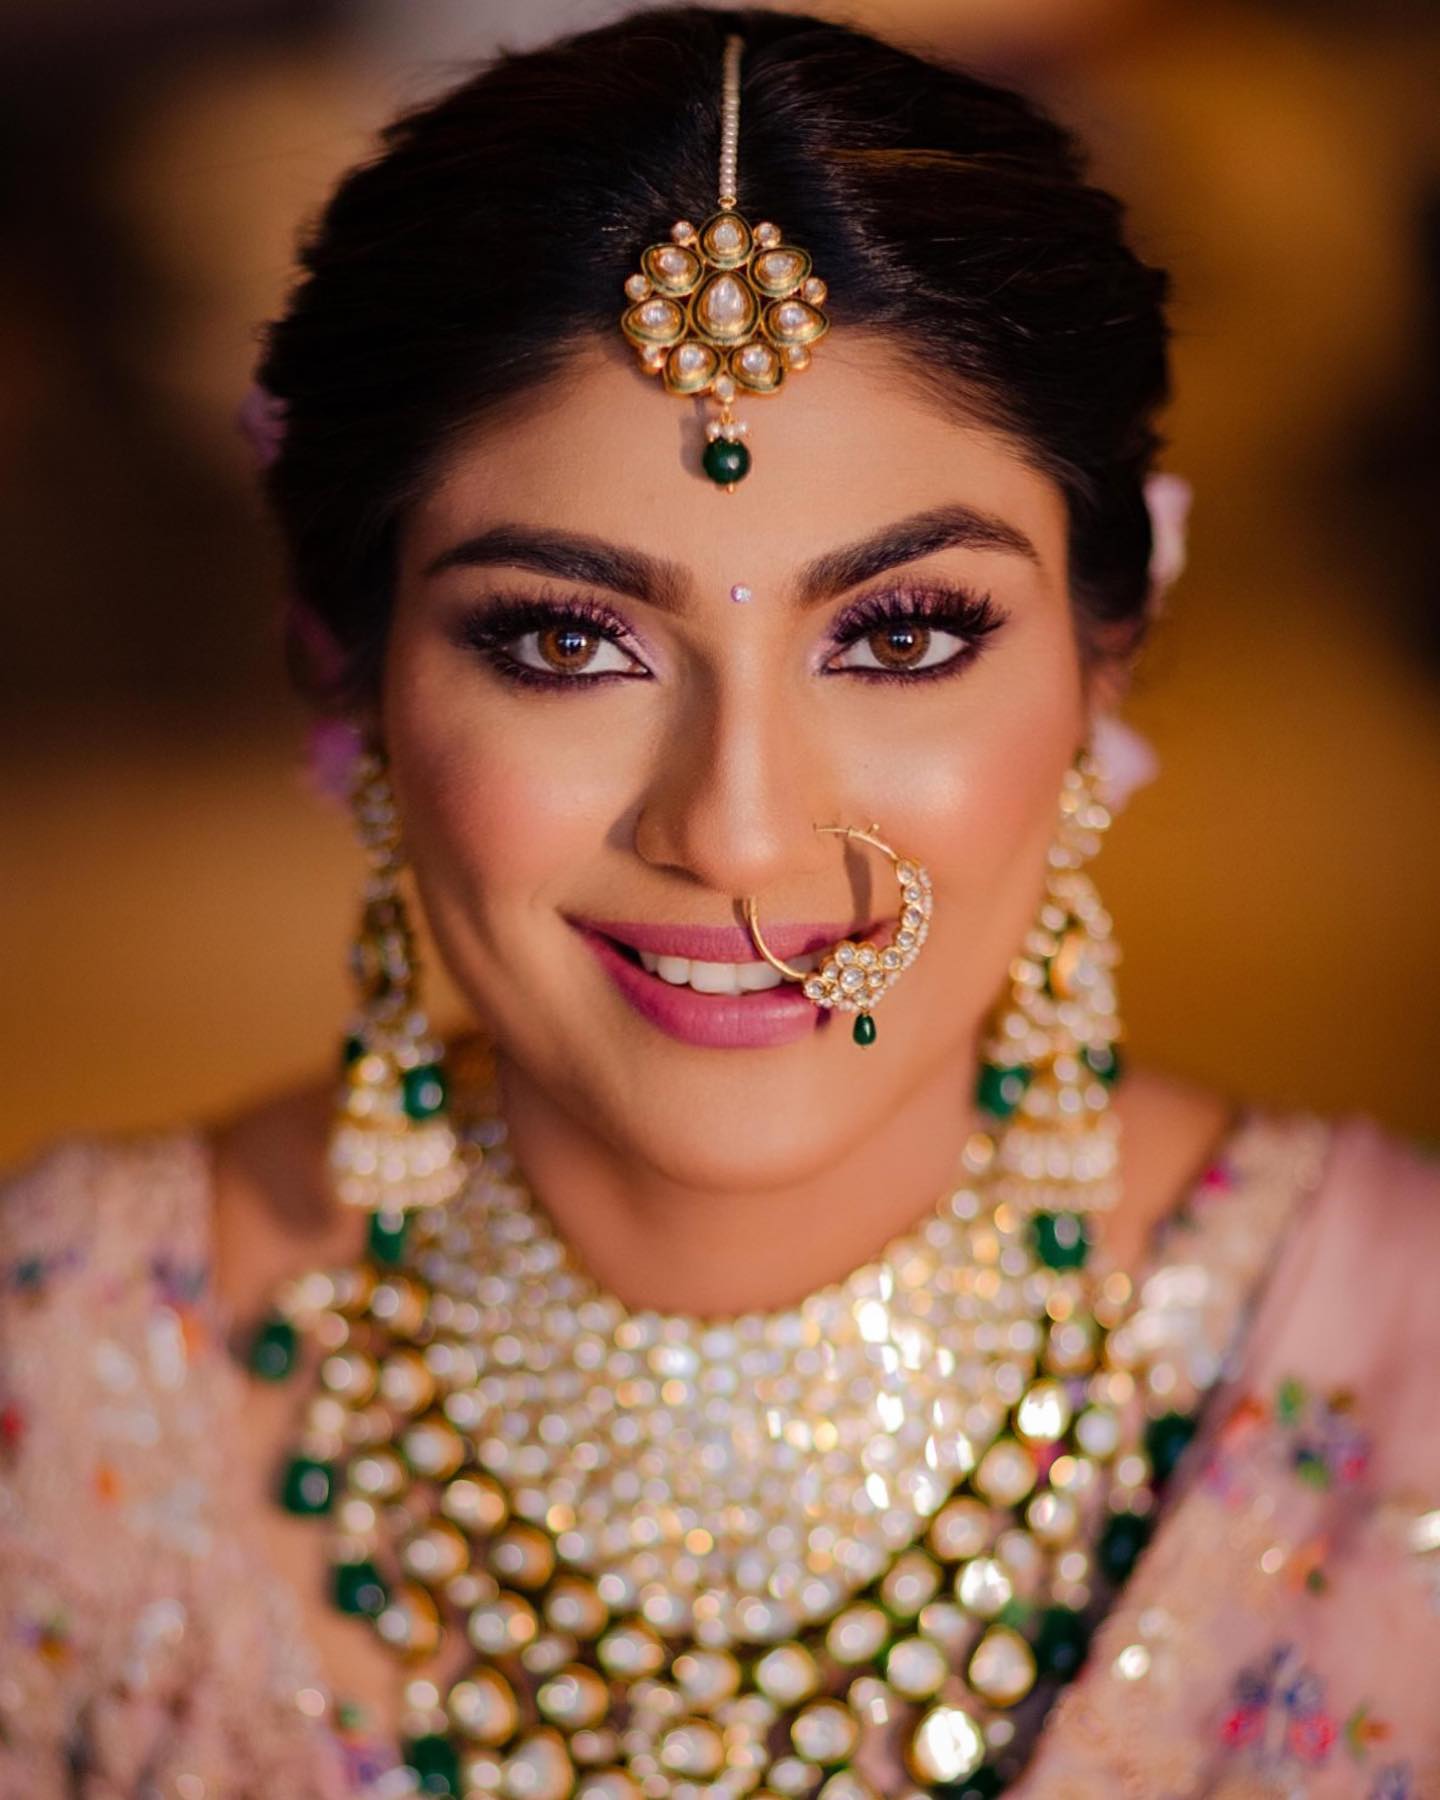 Trend Alert: Anamika Khanna's blush pink bridal for a modern twist!